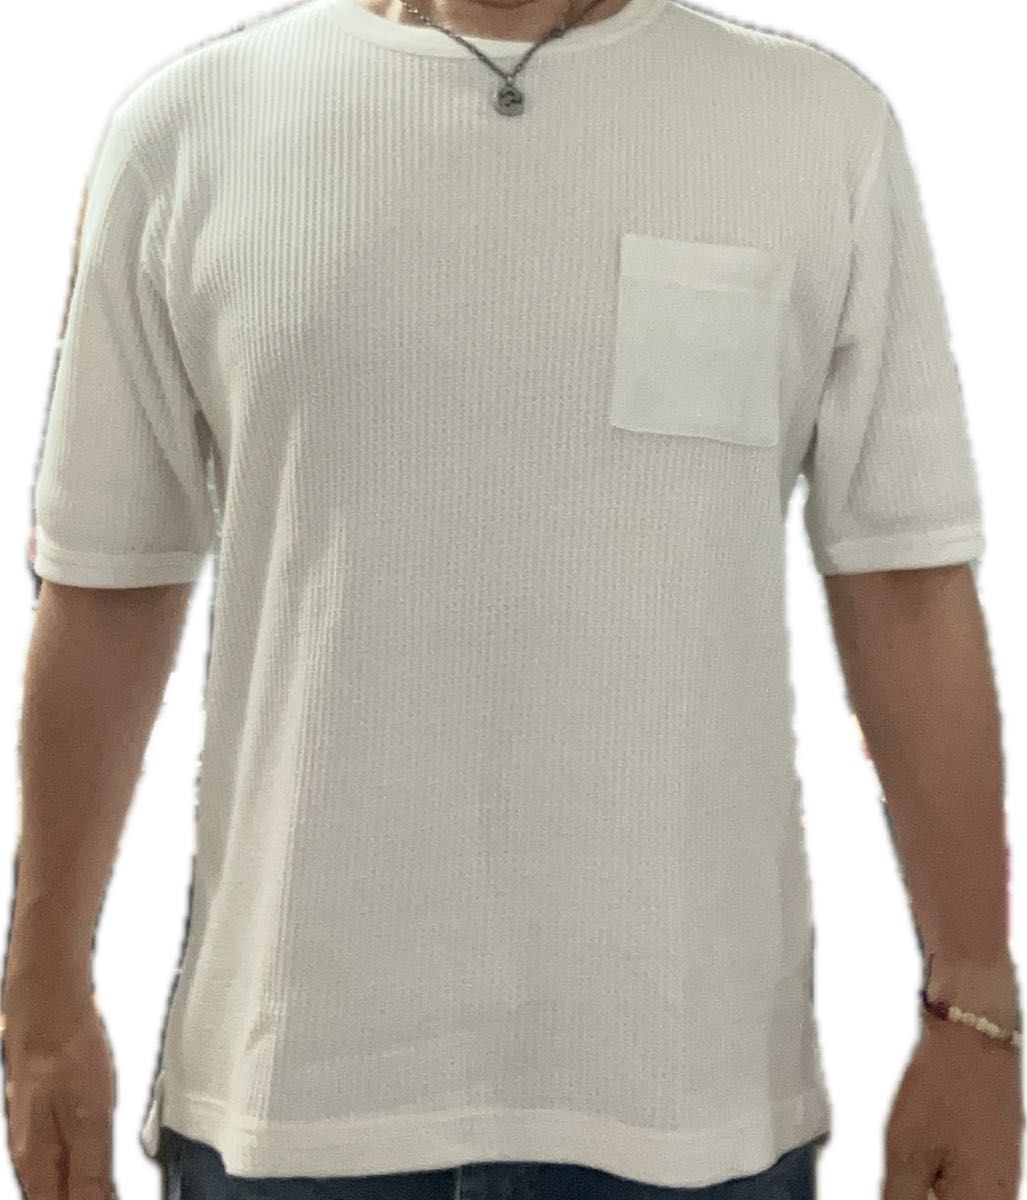 THE SHOP TK タケオキクチ 半袖Tシャツ メンズL ホワイト